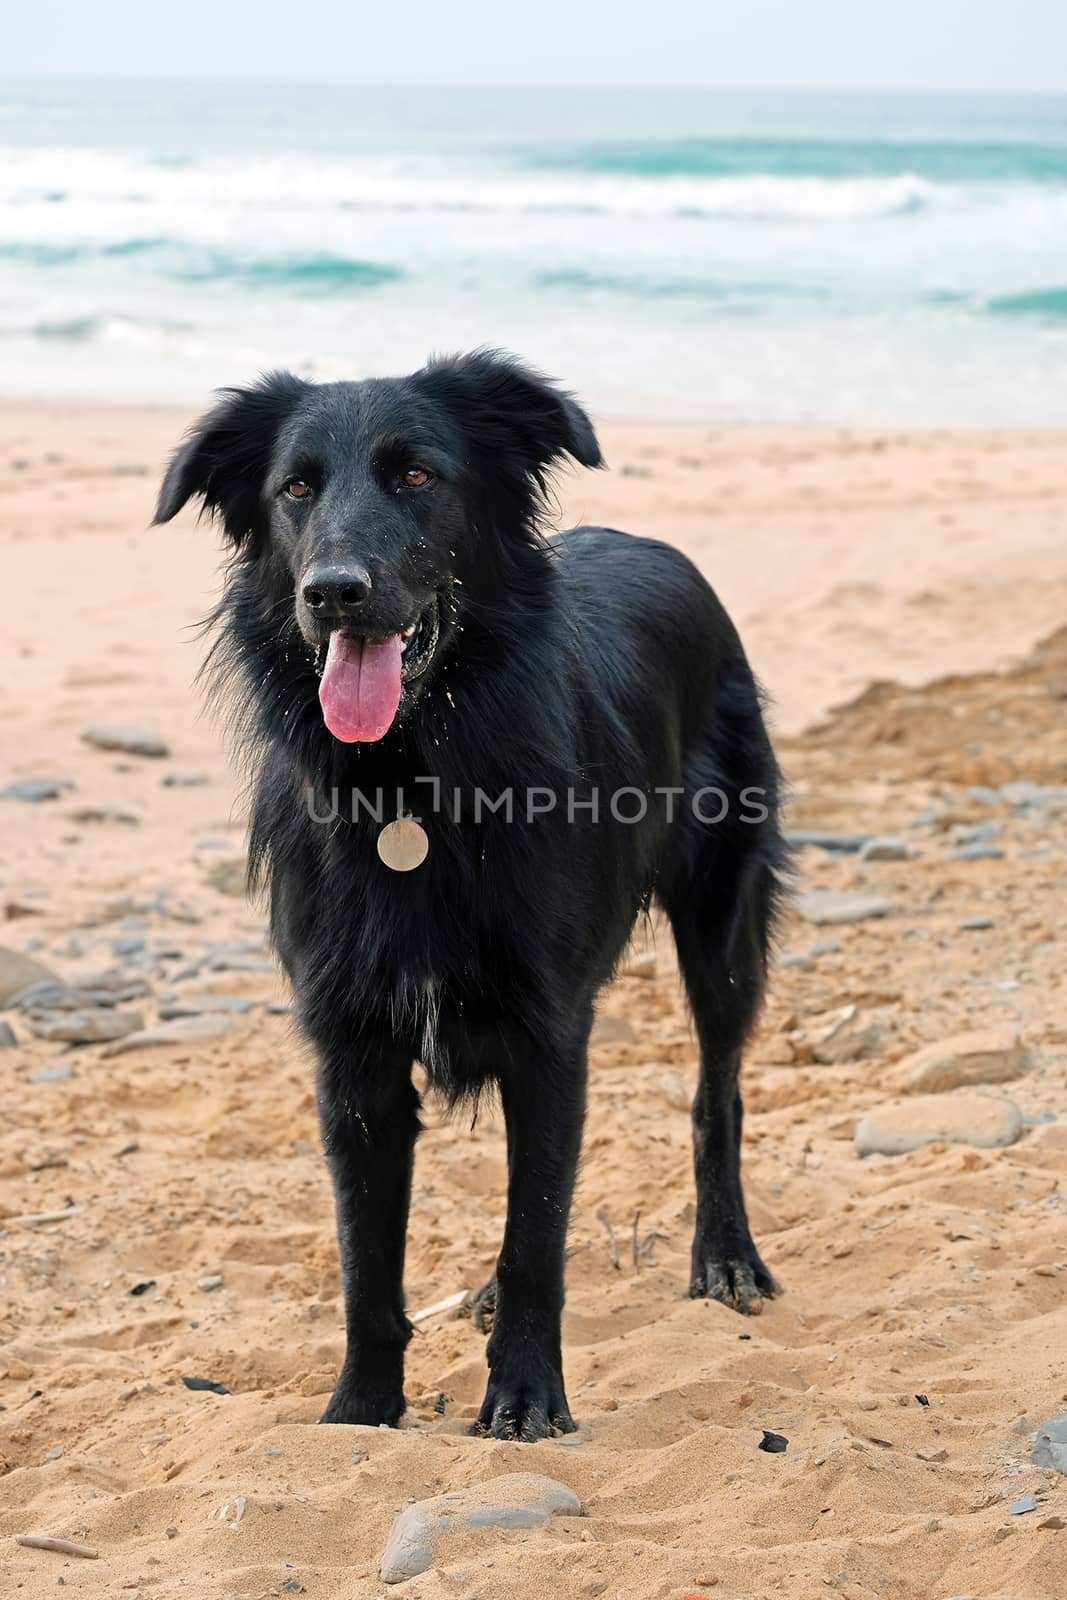 Black labrador at the beach by devy